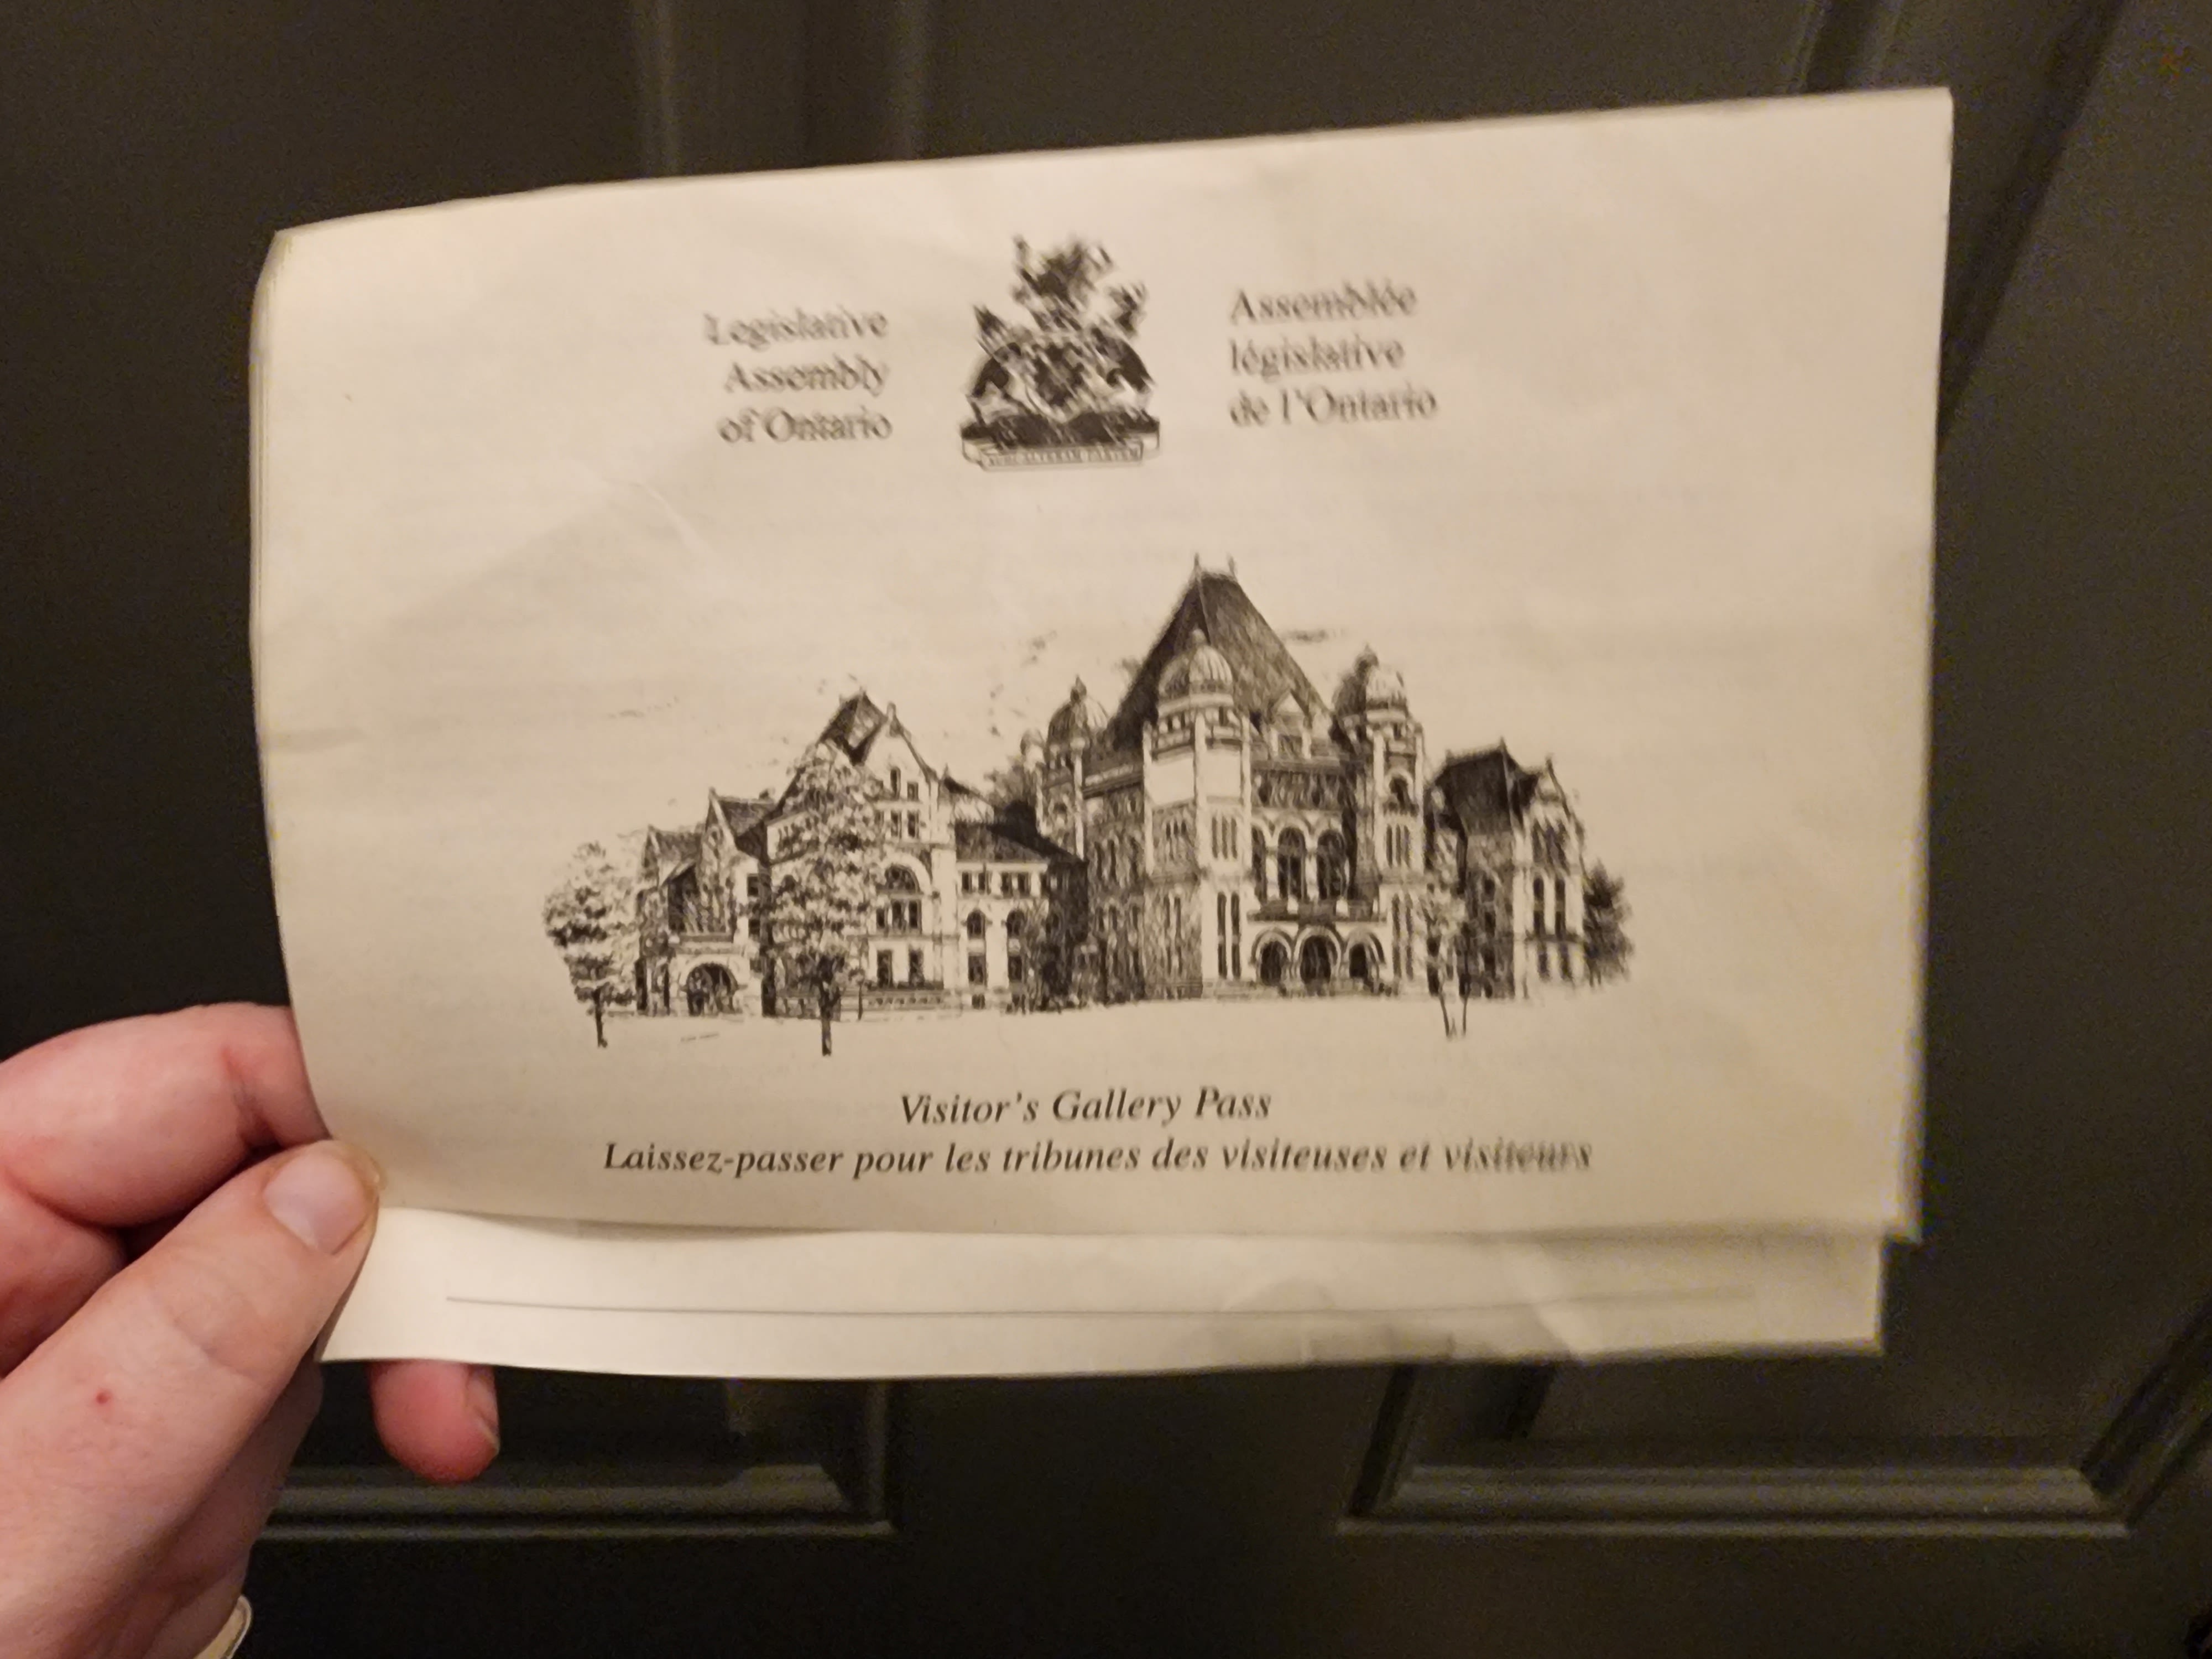 Hand holding image of Ontario Legislature Building